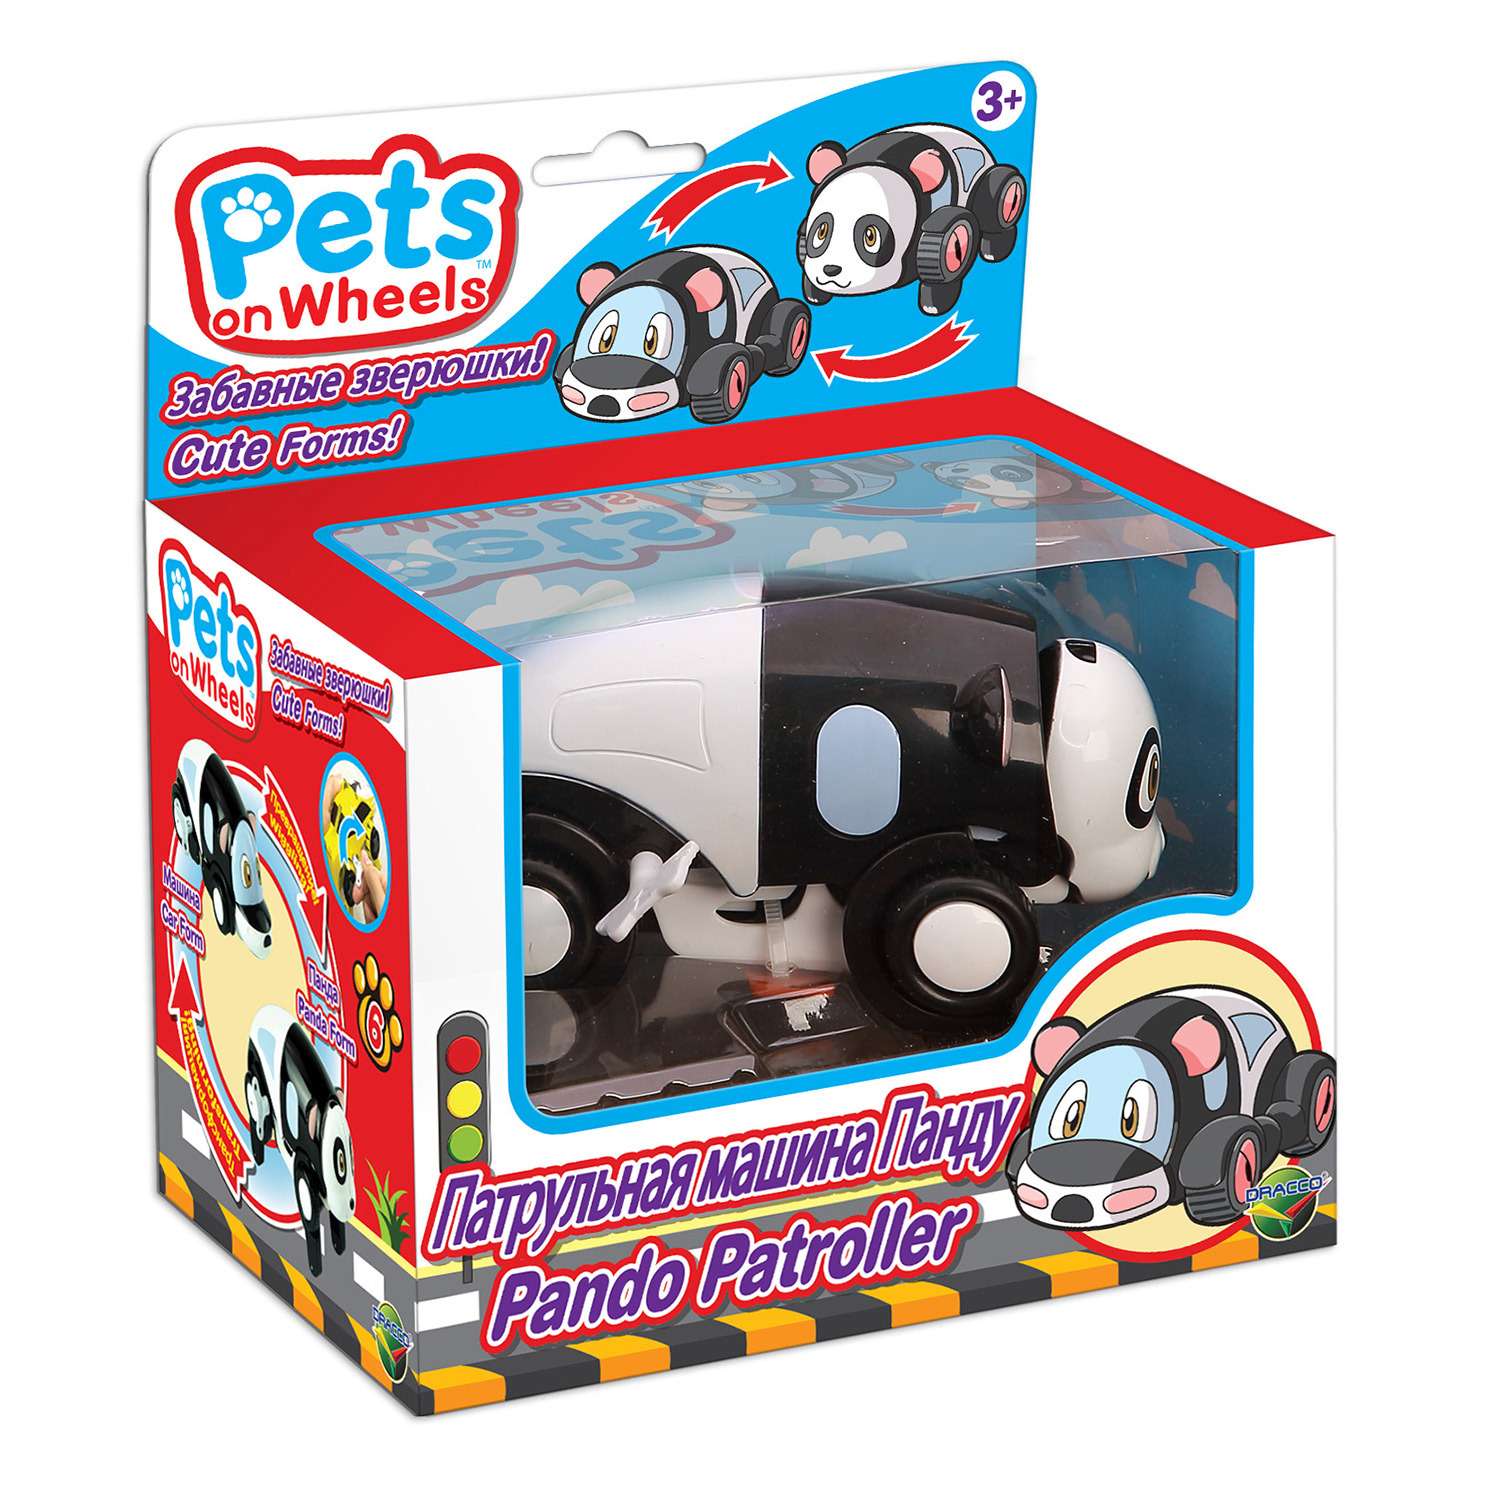 Машинки pets. Машинка Панда. Машинка Панда на колесах. Машинки Панда игрушки. Панда на машинке игрушечной.